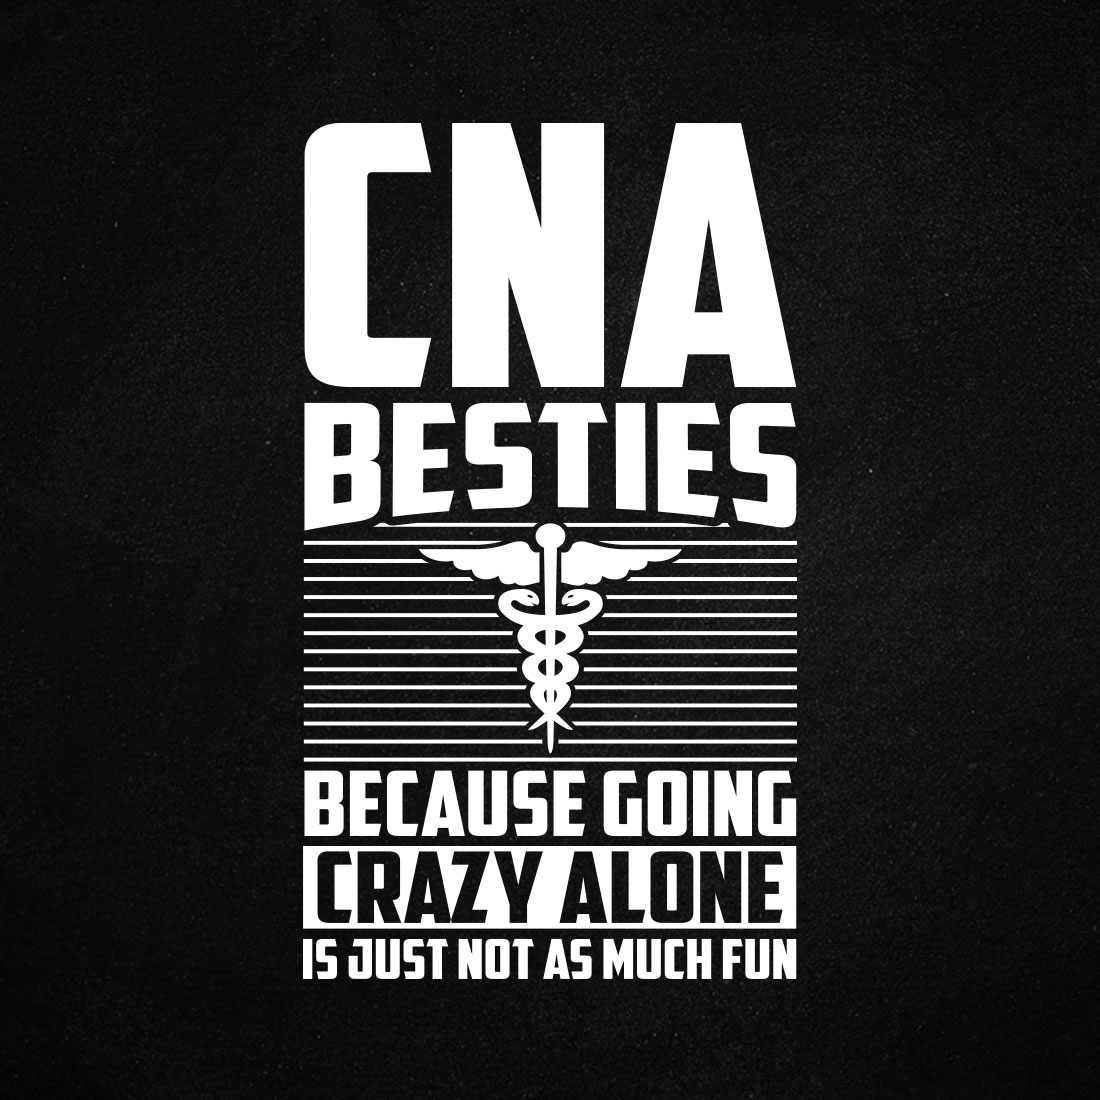 Funny CNA Besties Healthcare Worker Nurse T shirt Design cover image.